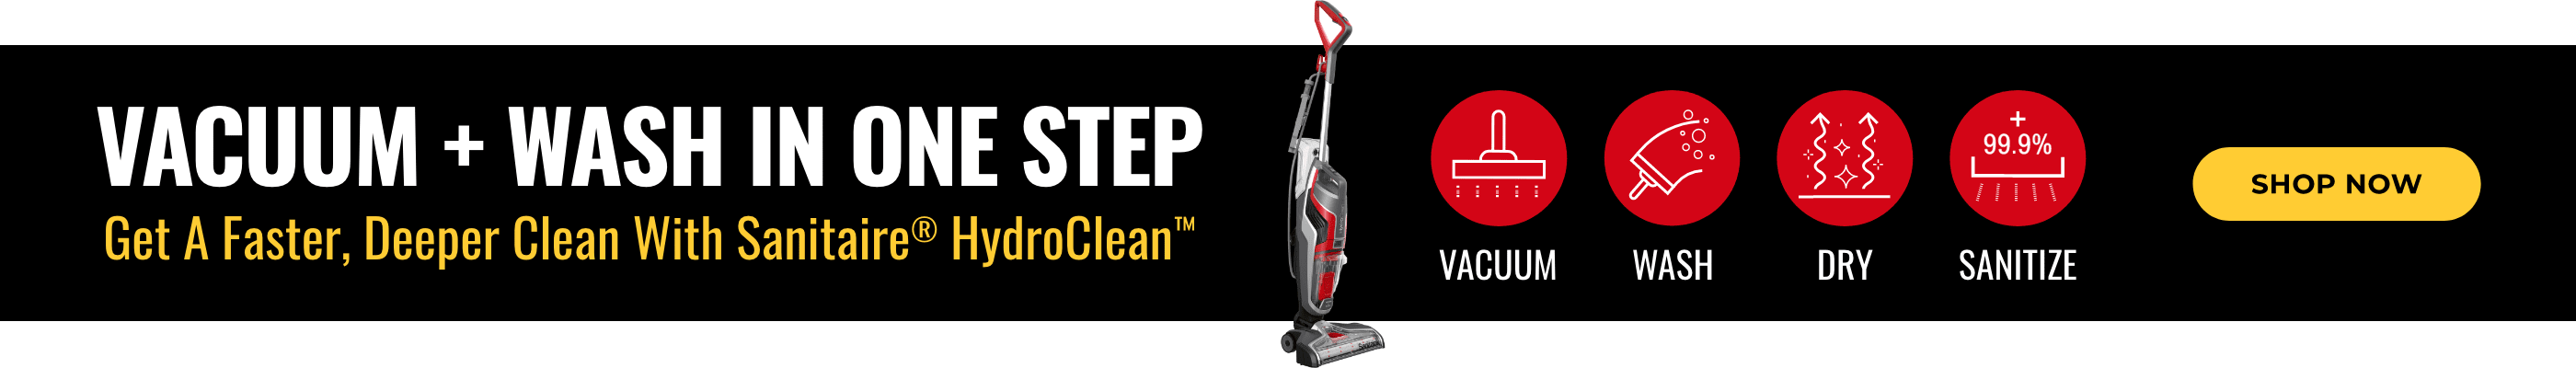 Vacuum + Wash In One Step